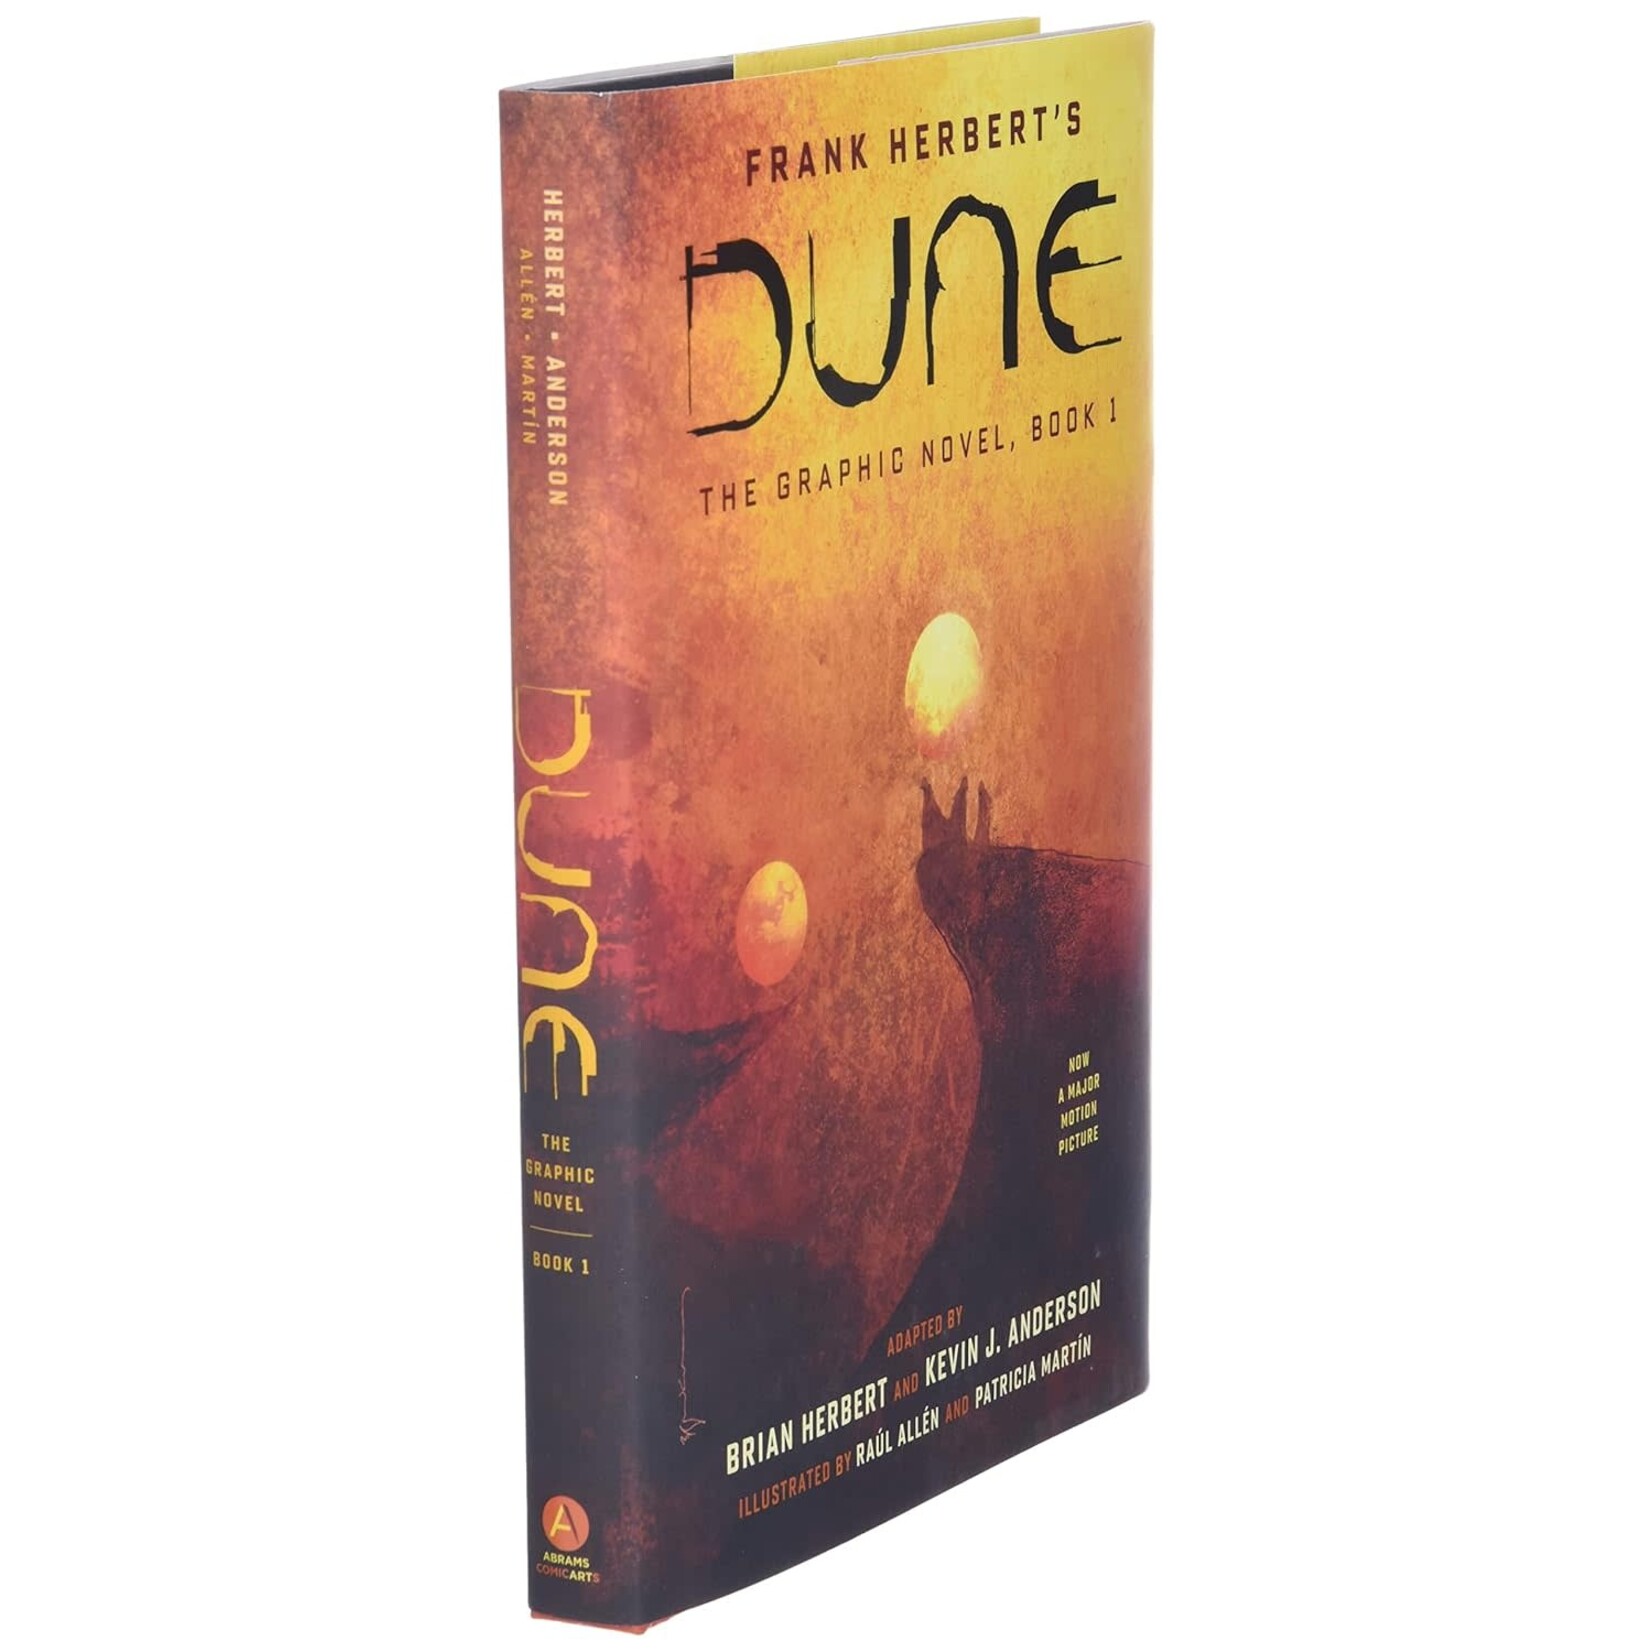 Frank Herbert's DUNE: The Graphic Novel, Book 1